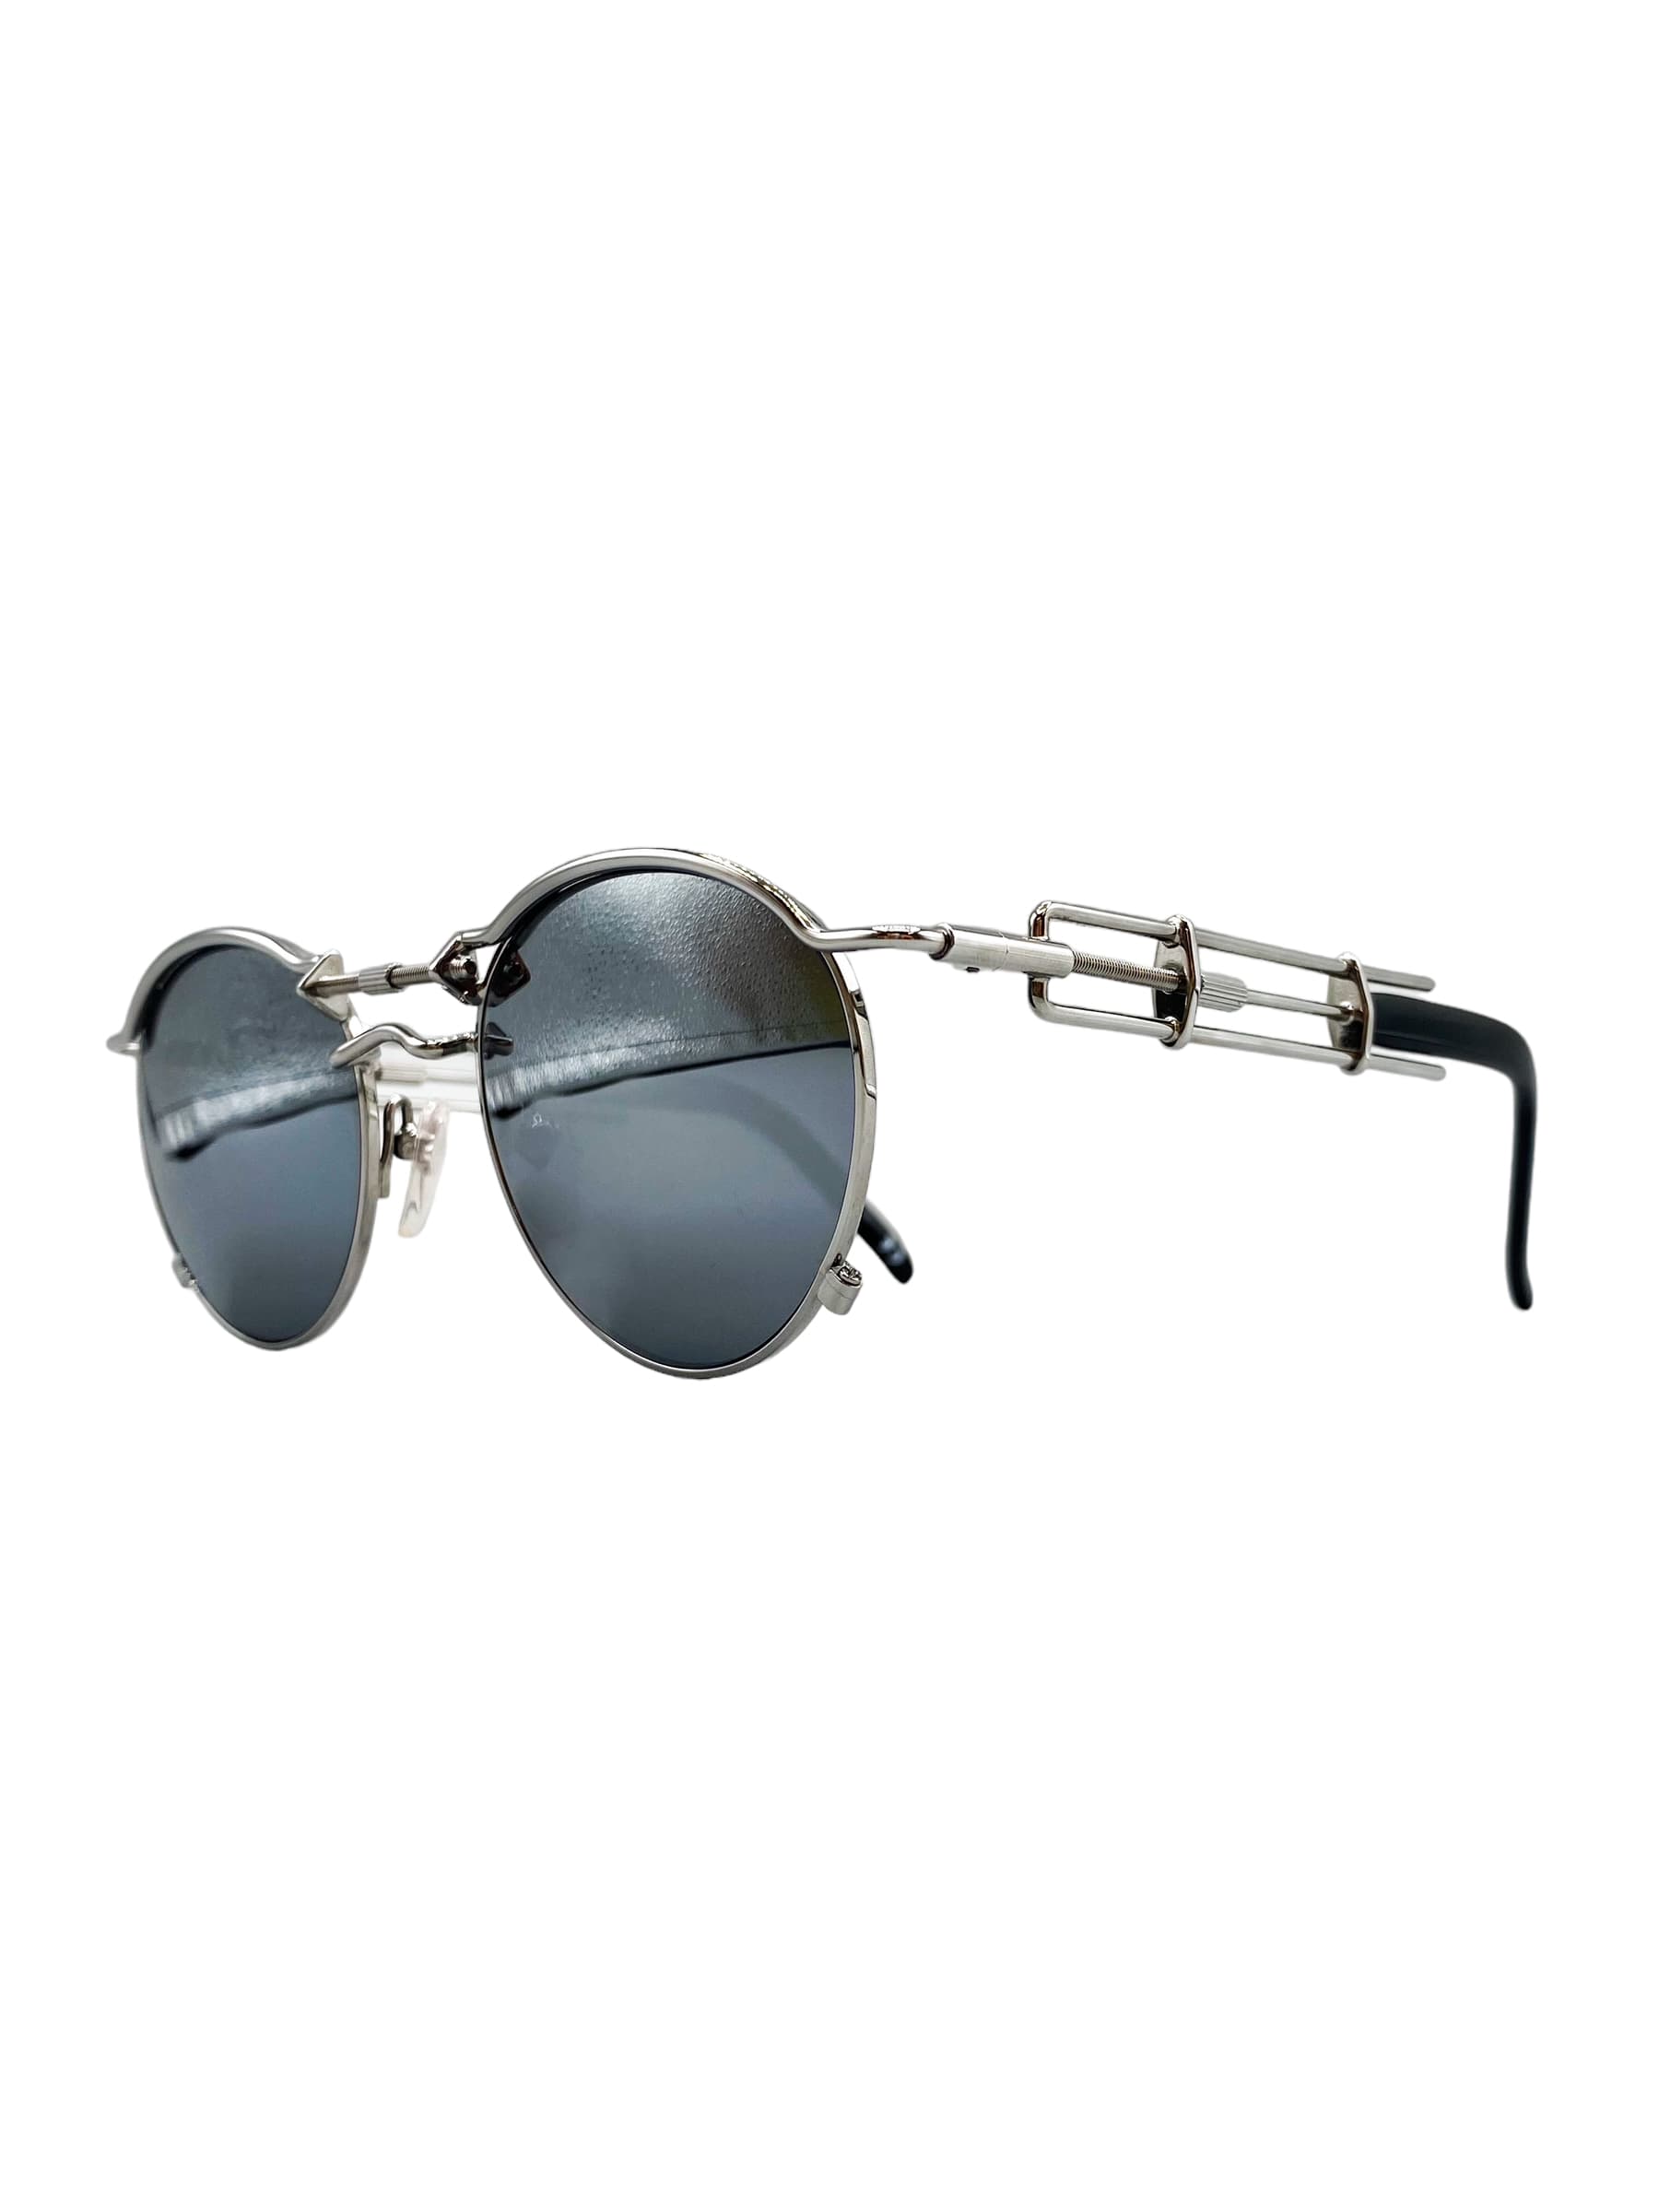 Vintage Jean Paul Gaultier Sunglasses - Slippy Shades